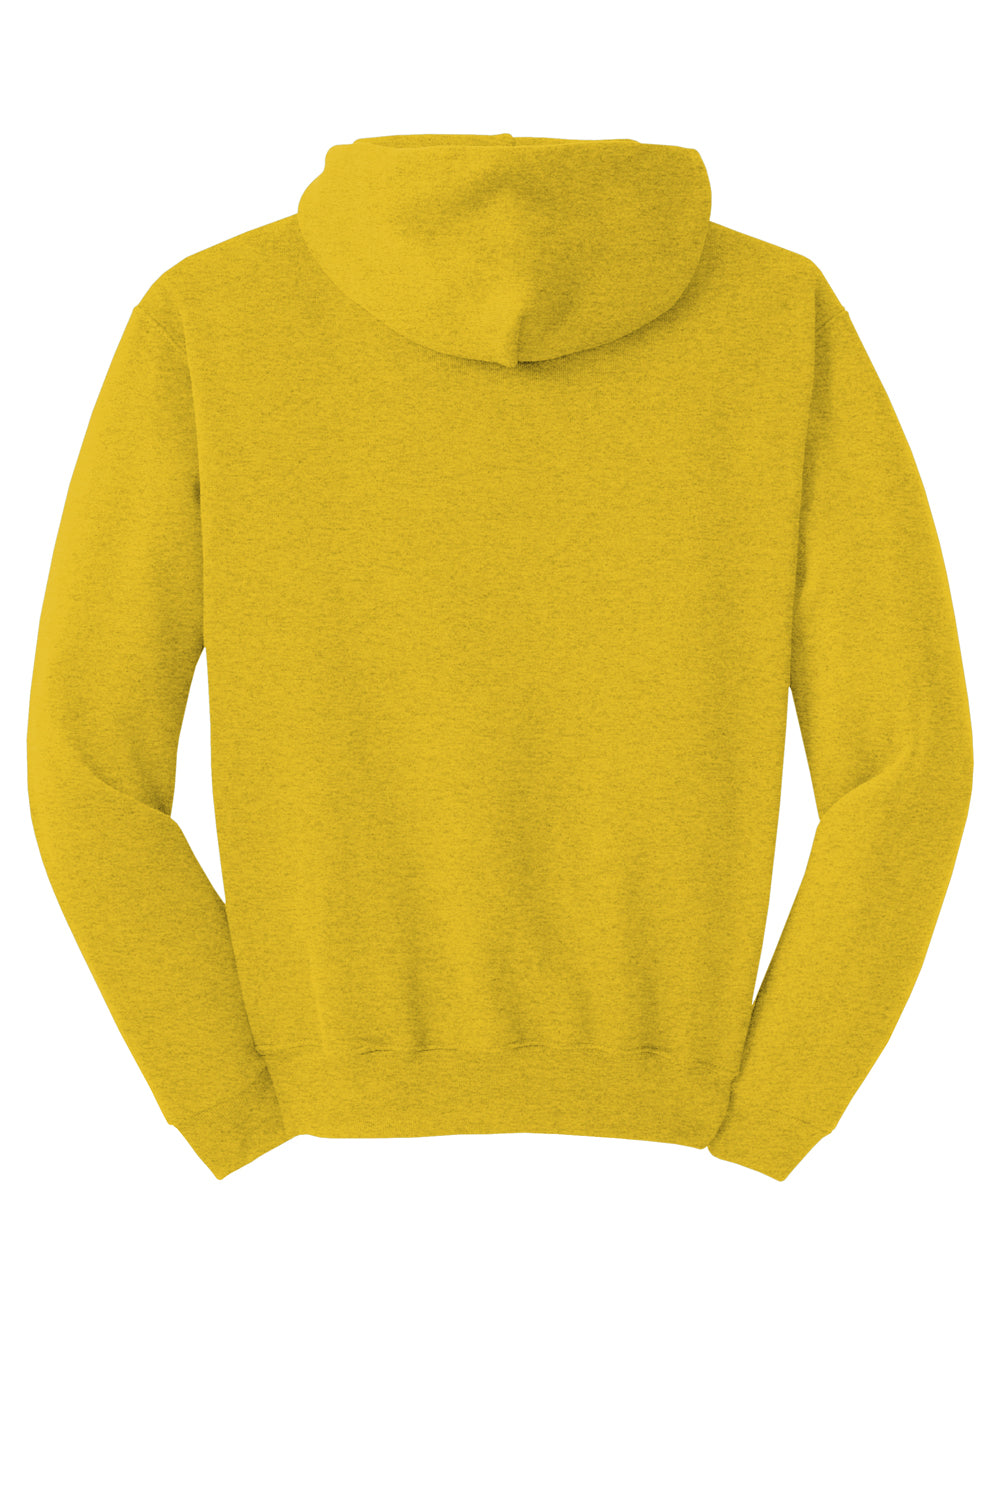 Jerzees 996M/996/996MR Mens NuBlend Fleece Hooded Sweatshirt Hoodie Heather Mustard Yellow Flat Back